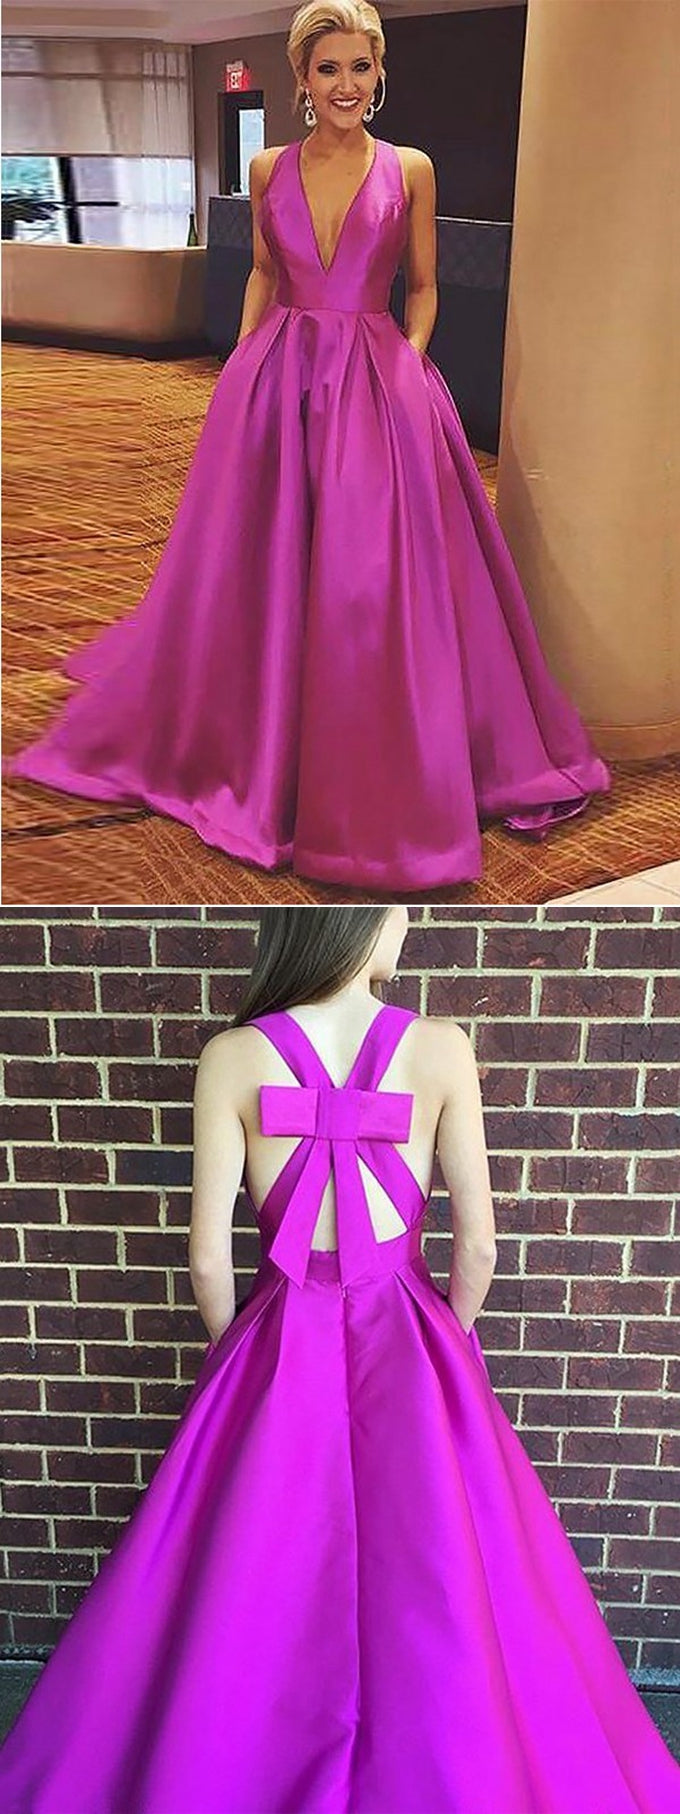 Hot Pink Prom Dress with Pockets, Evening Dress, Formal Dresses, Graduation School Party Dance Dress